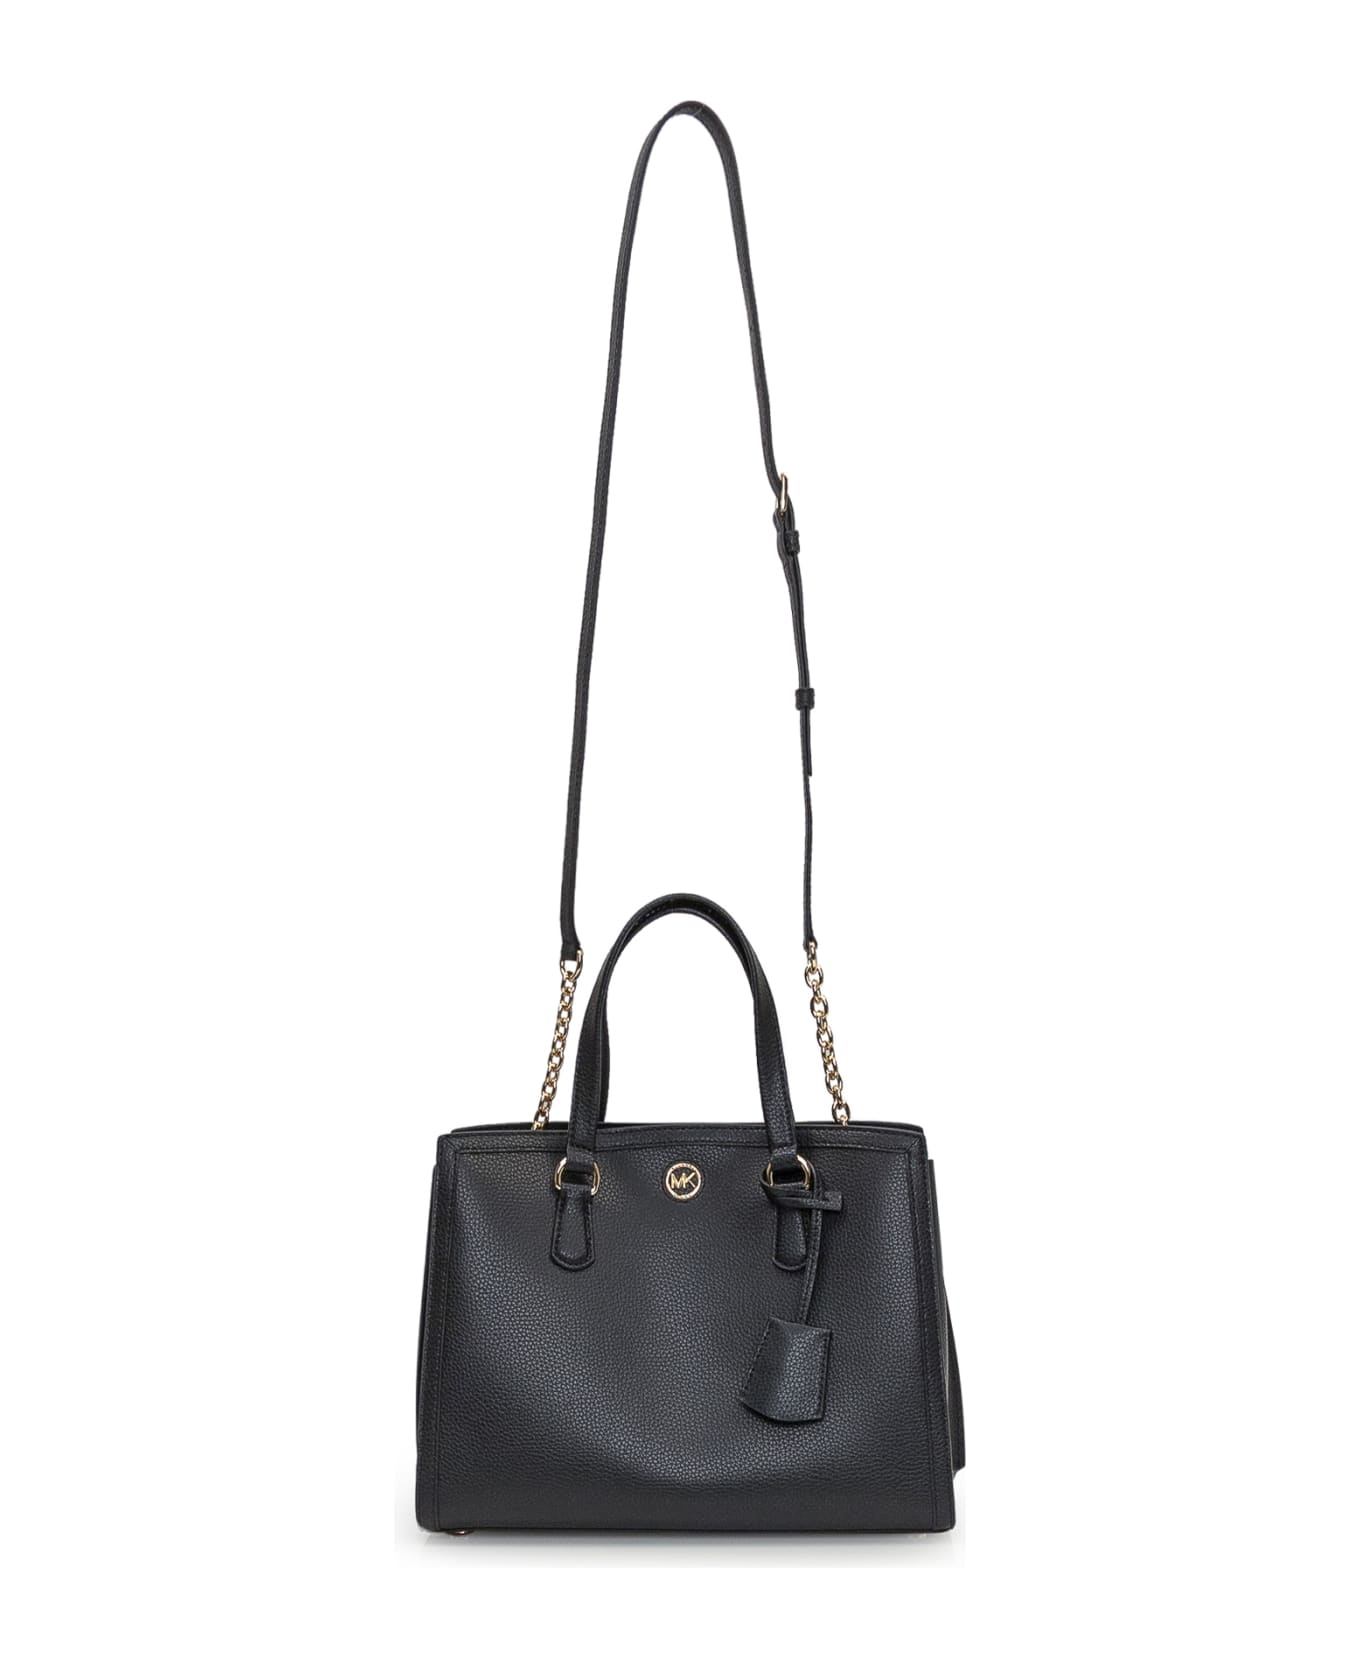 Michael Kors Chantal Leather Handbag - Black